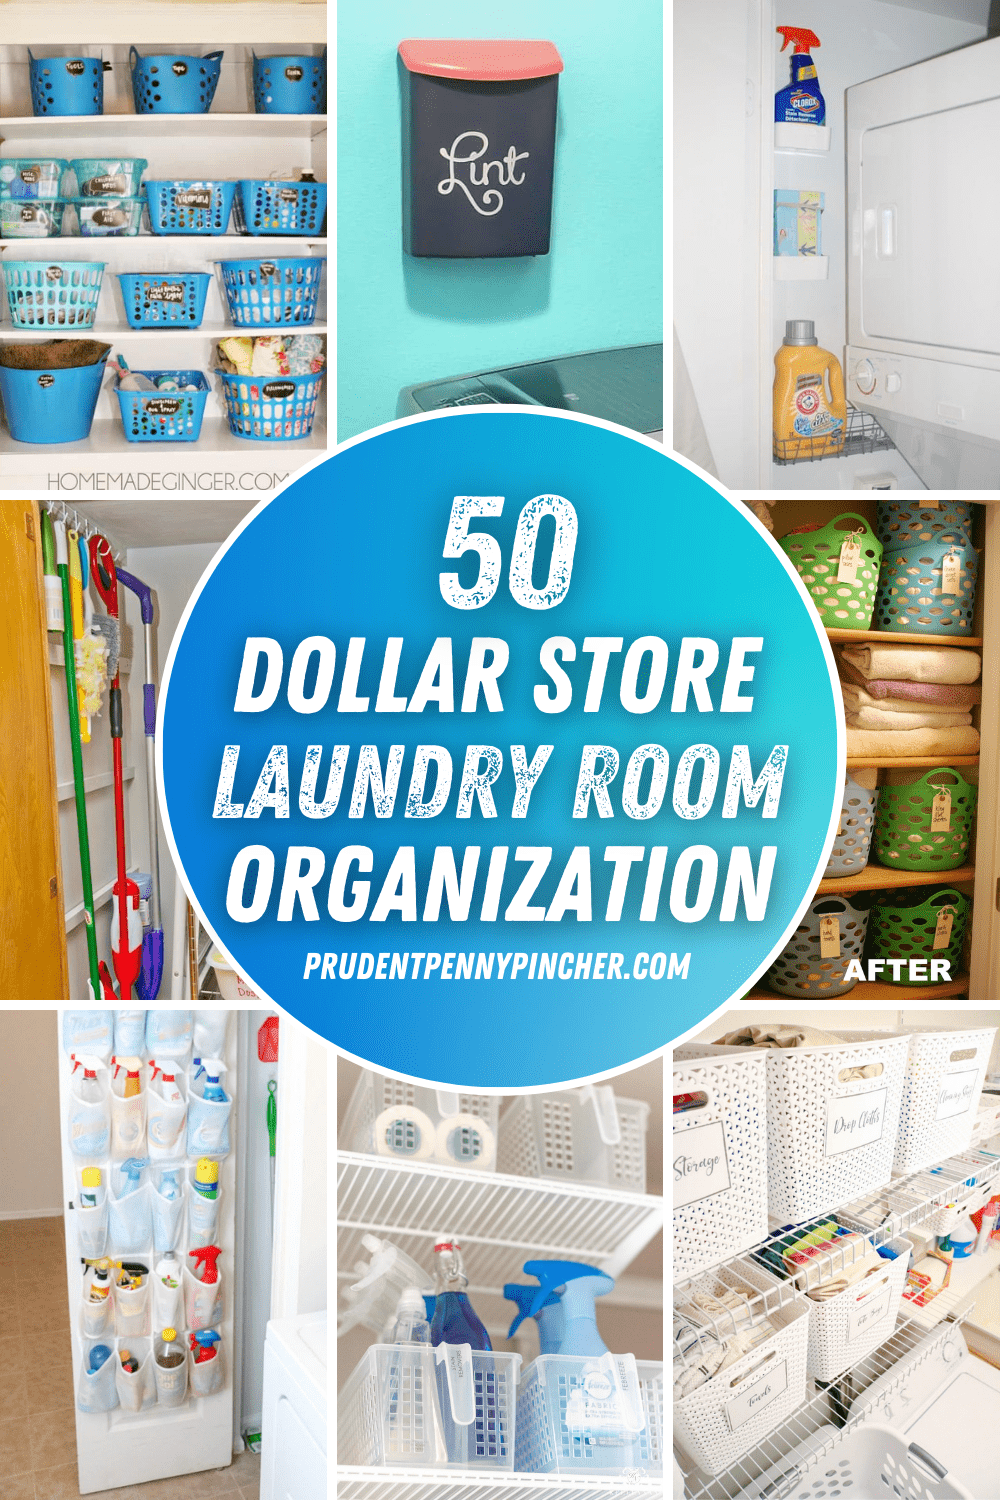 22 Laundry Room Organization Ideas: Hacks, Products & Photos